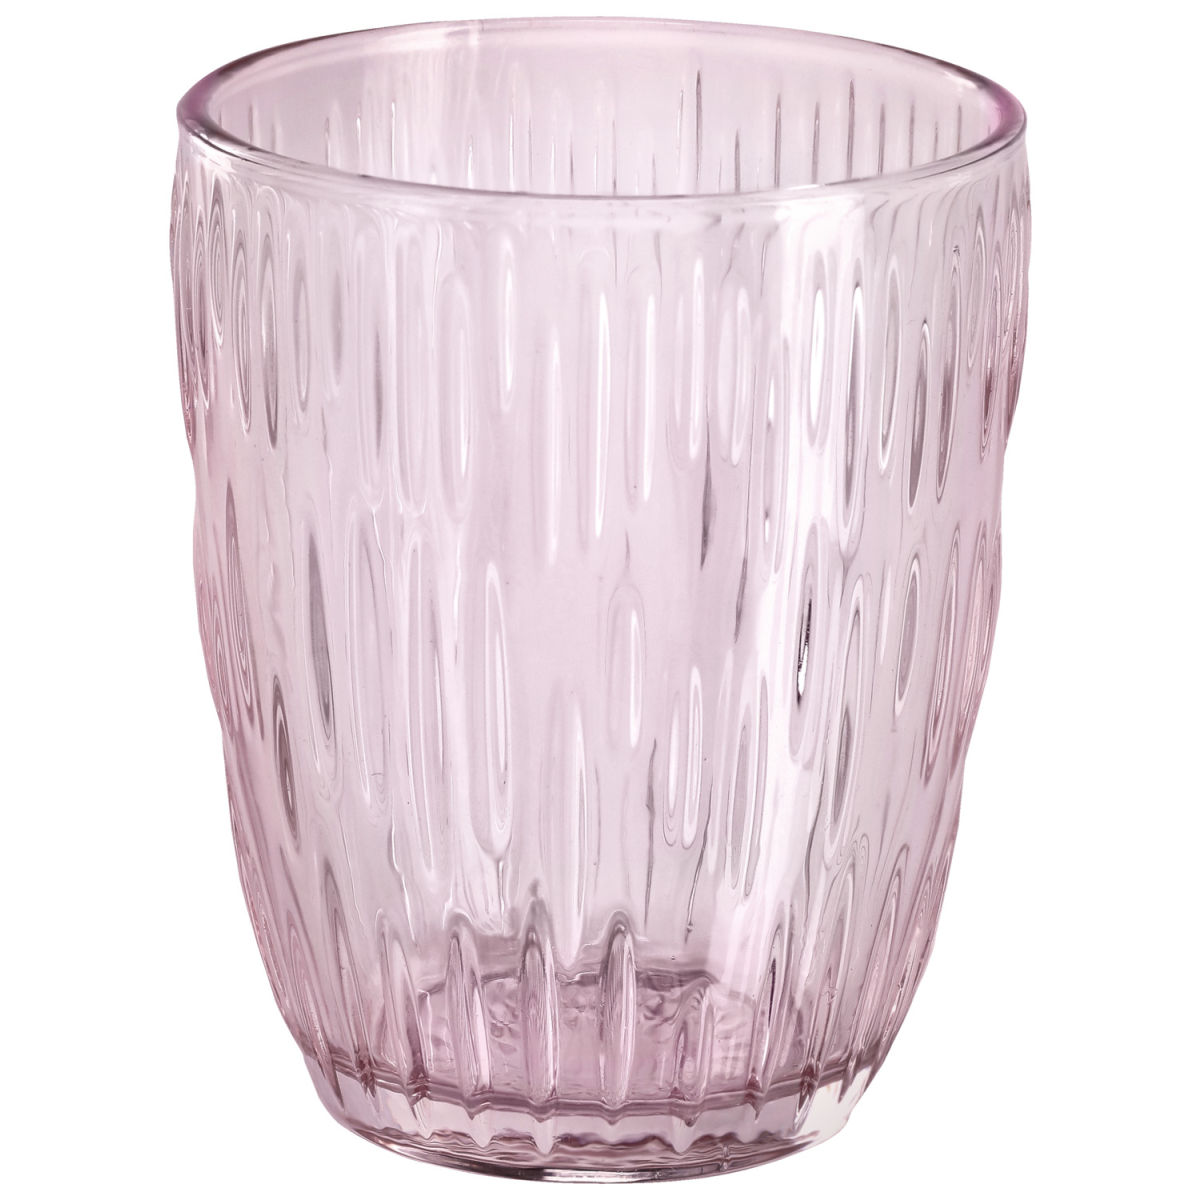 Vega Waterglas Kalea; 280ml, 8x9.8 cm (ØxH); rosa; 6 stuk / verpakking